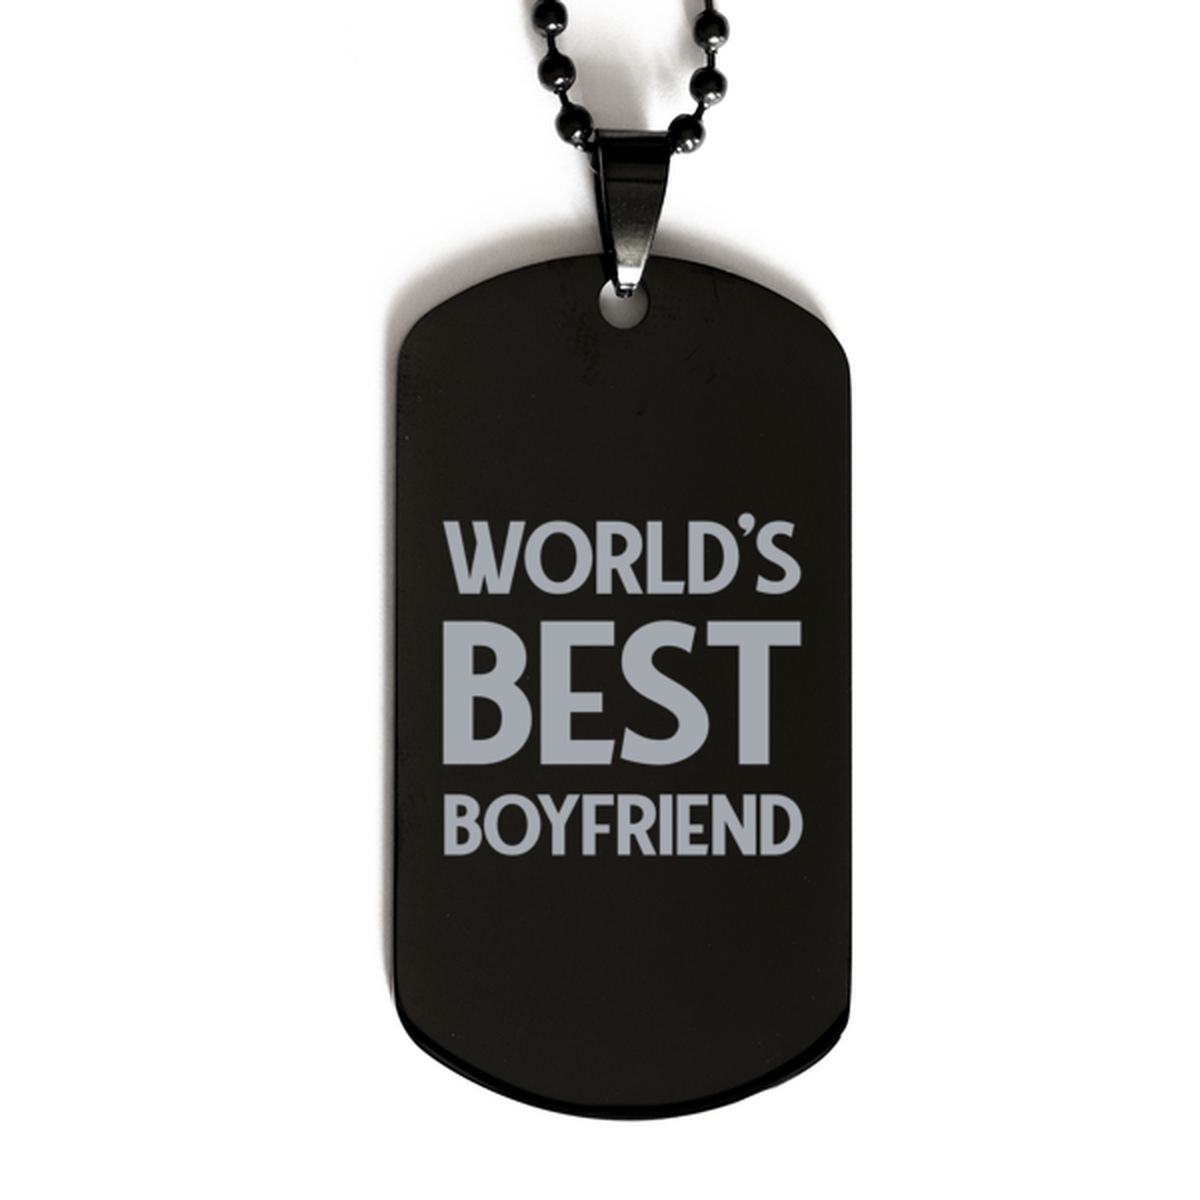 Worlds Best Boyfriend Gifts, Funny Black Engraved Dog Tag For Boyfriend, Birthday Presents For Men